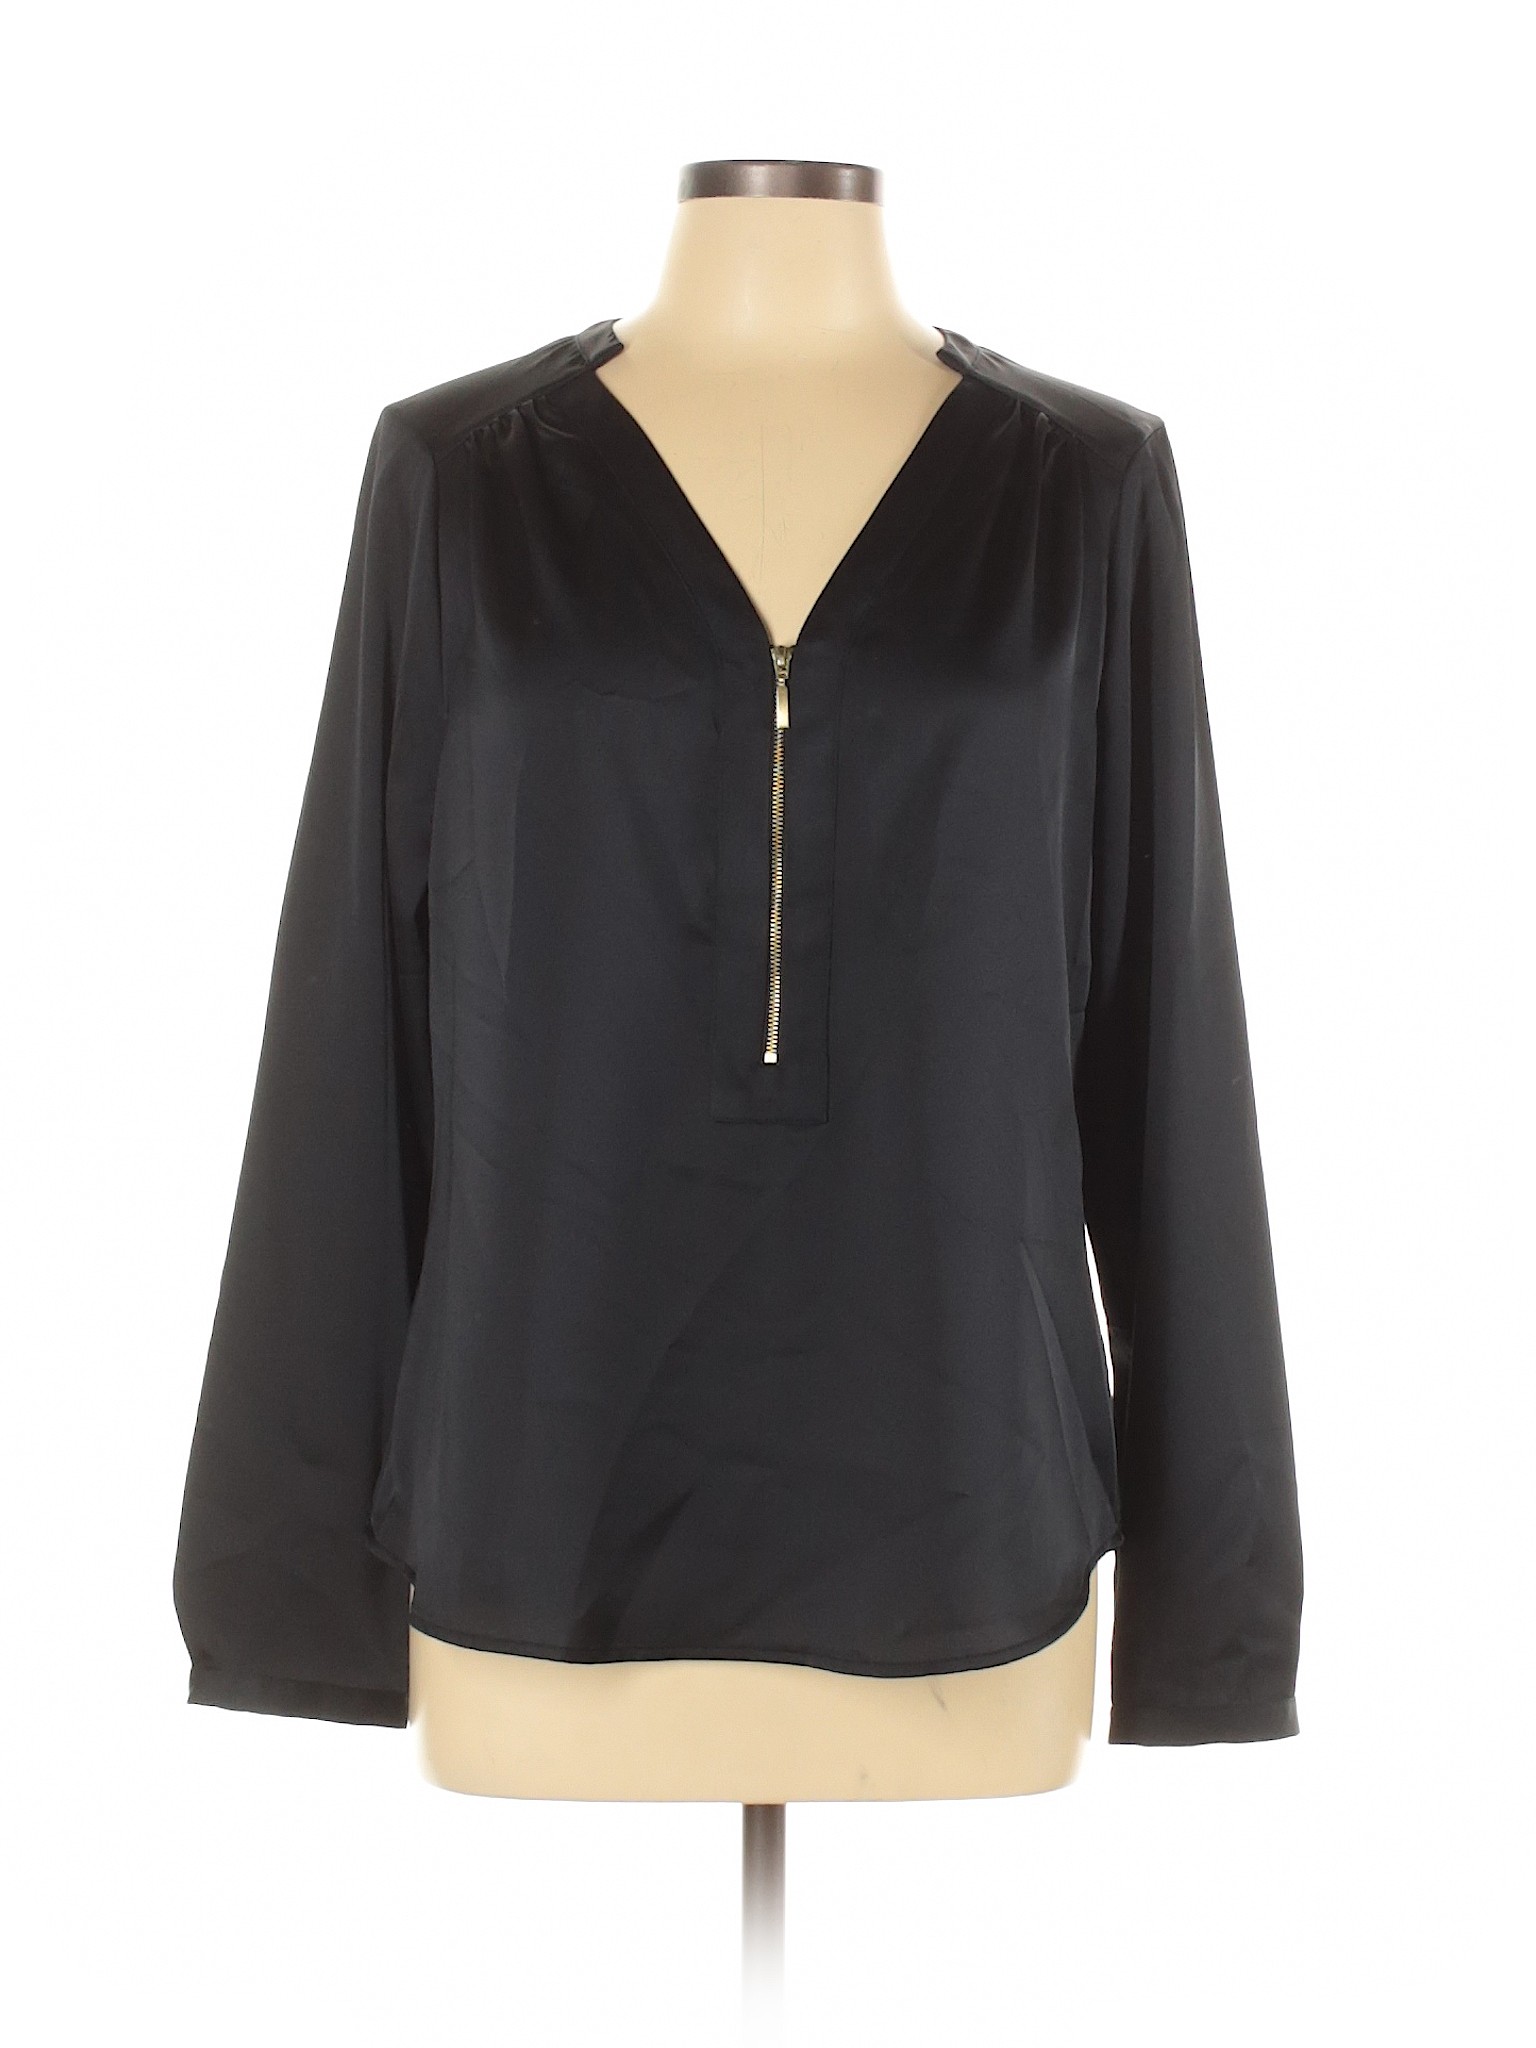 The Limited Women Black Long Sleeve Blouse L | eBay